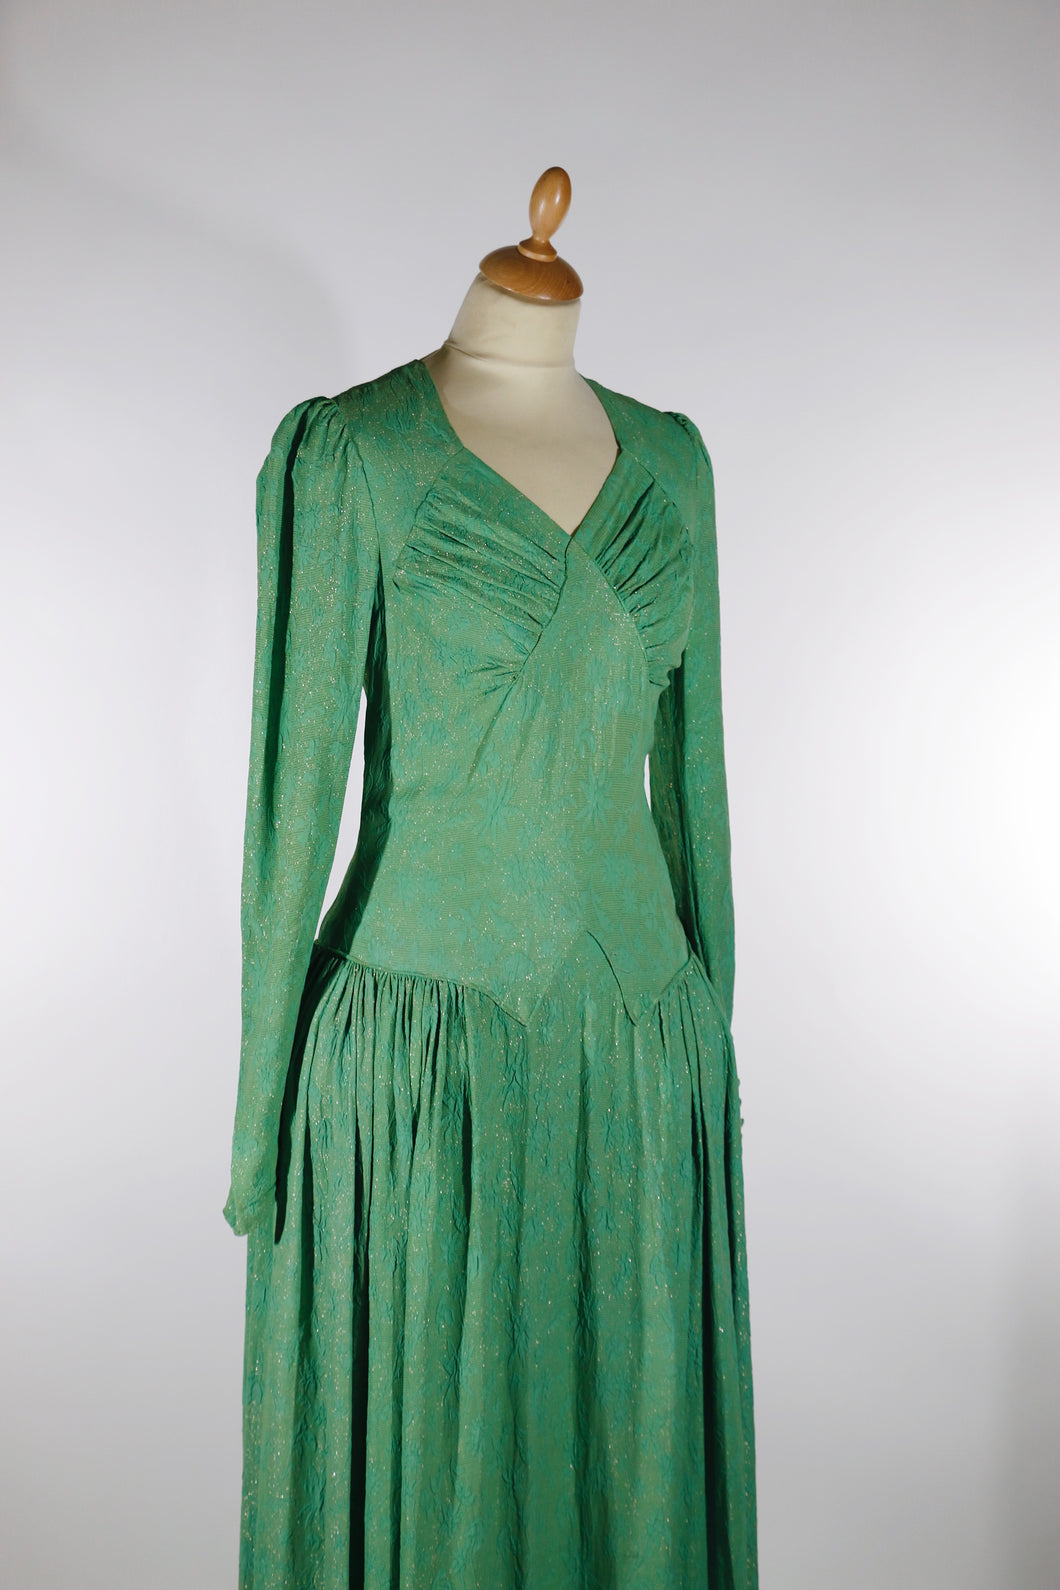 rare robe de soirée soie verte et doré '1940 rare evening dress green and golden silk